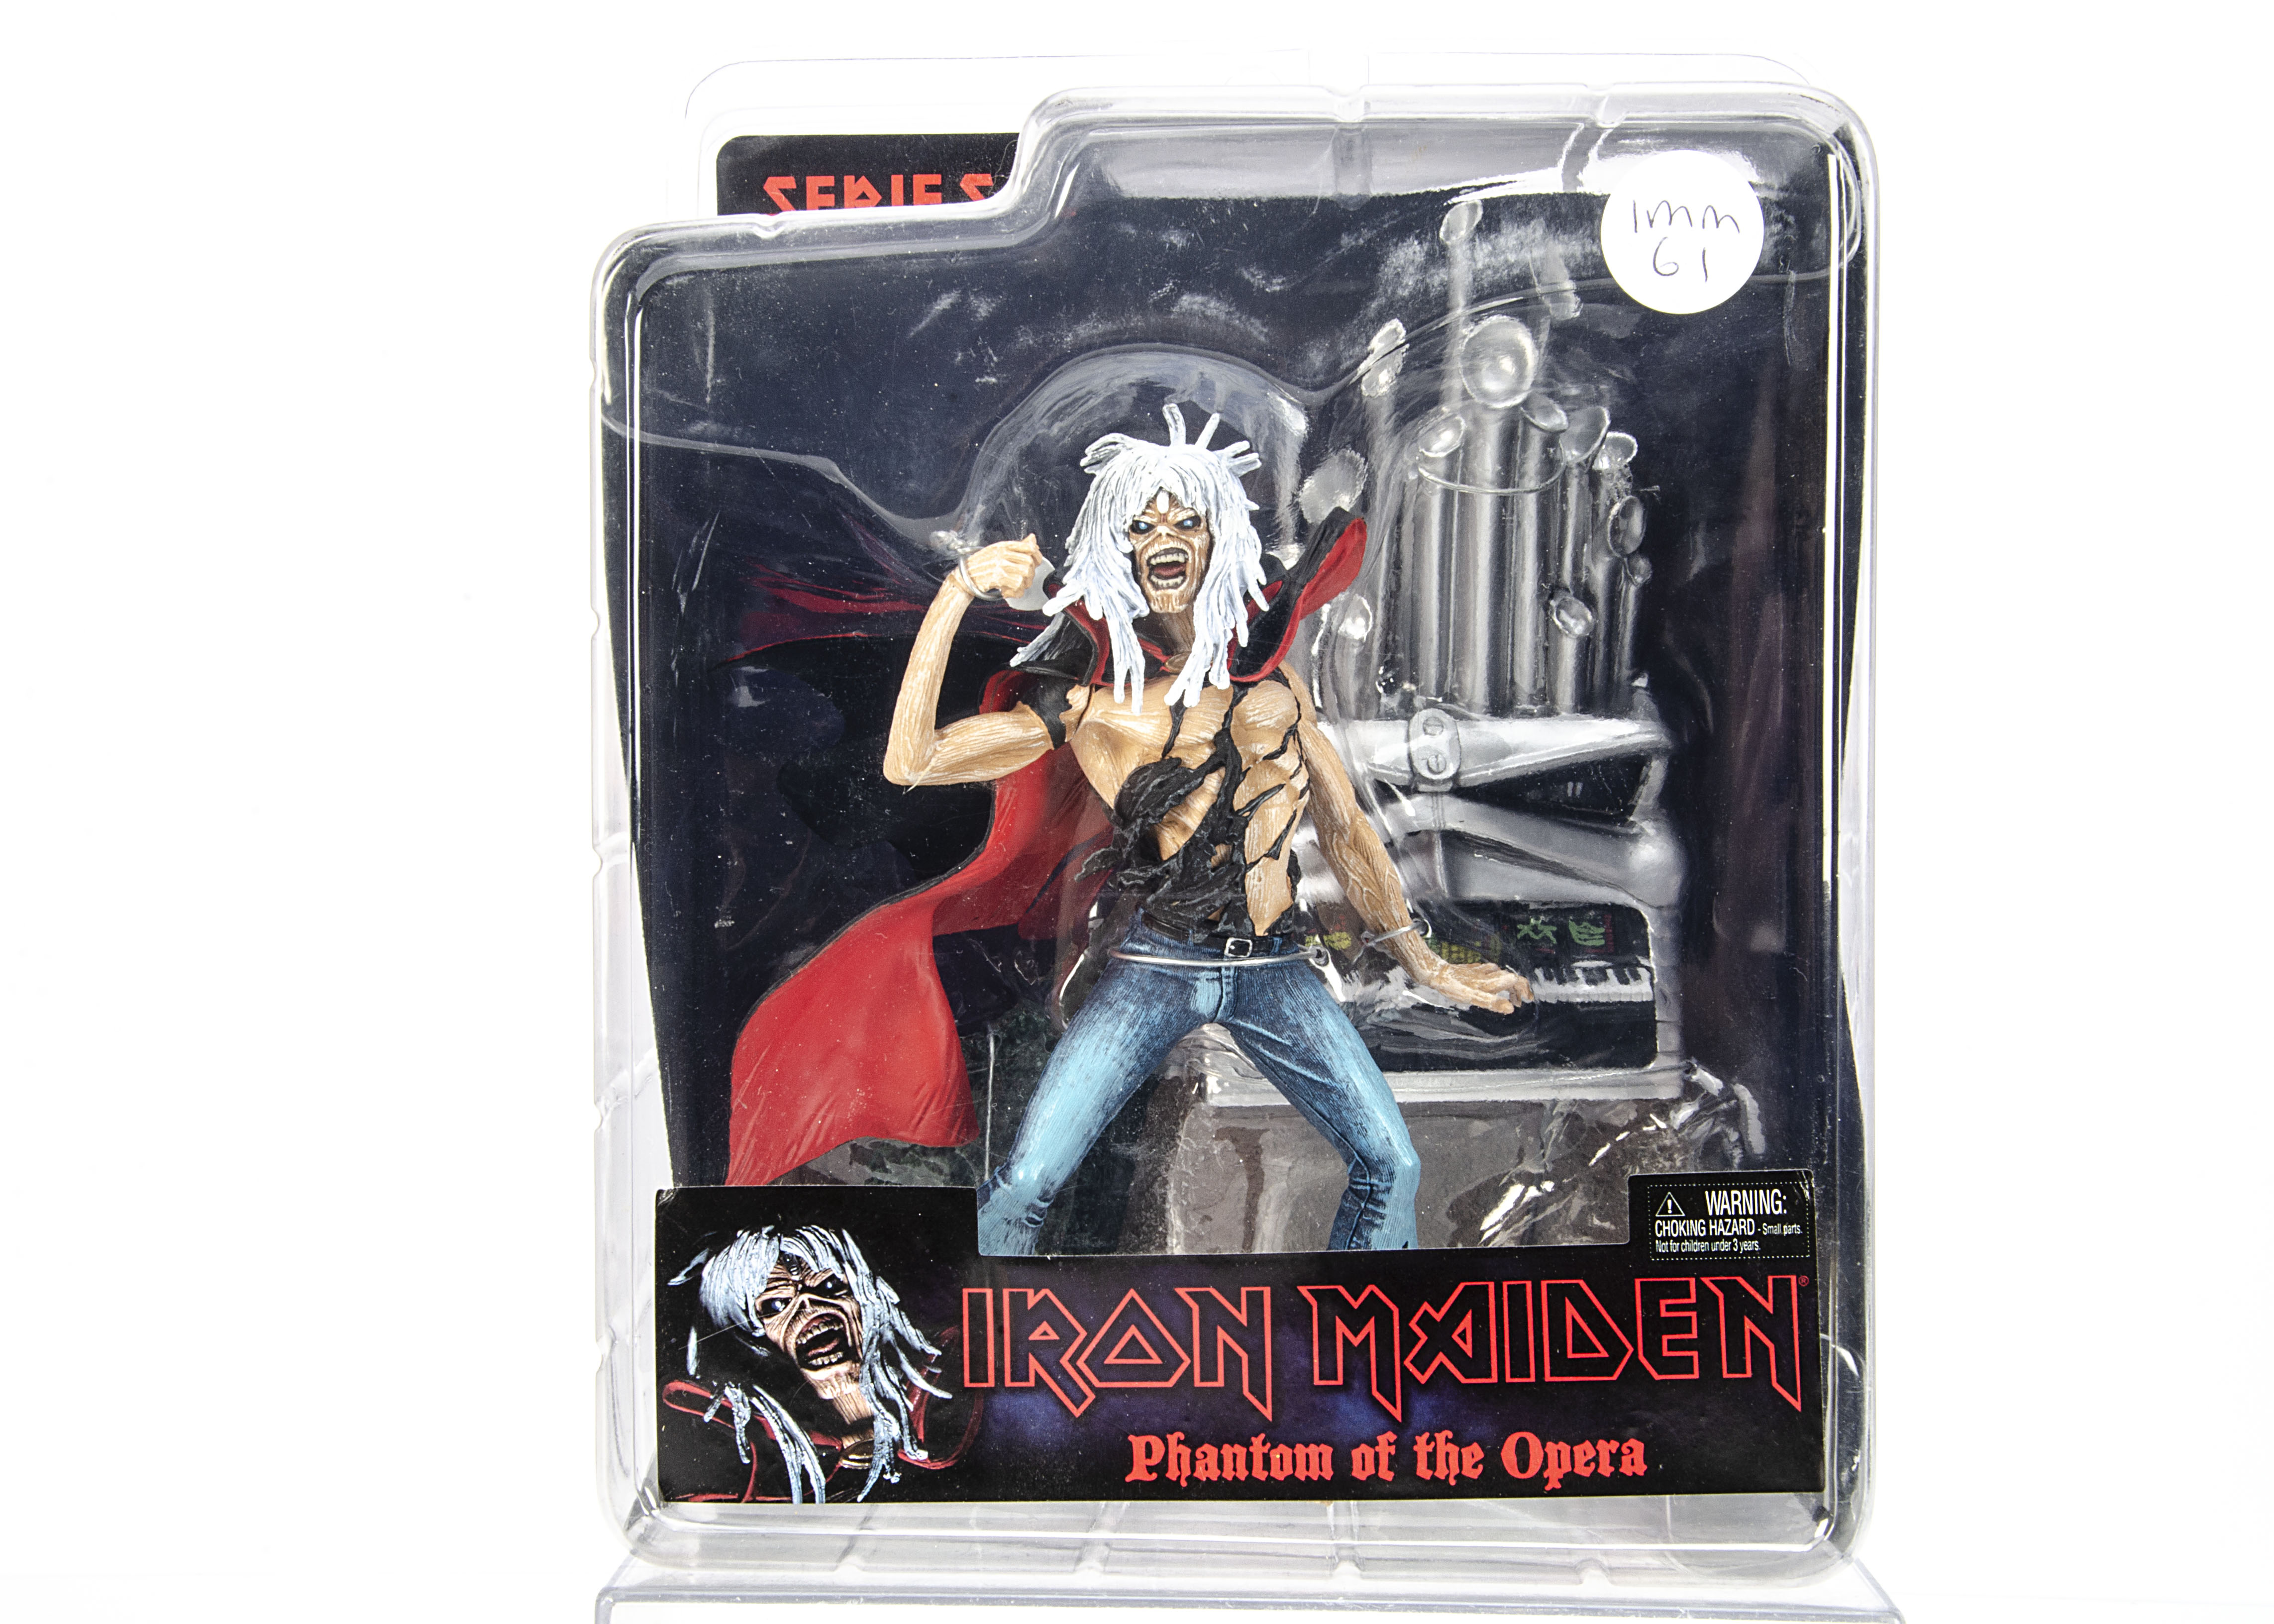 Iron Maiden Neca Figure, Phantom of the Opera 'Eddie' figure by NECA 2007 - brand new in Sealed Box